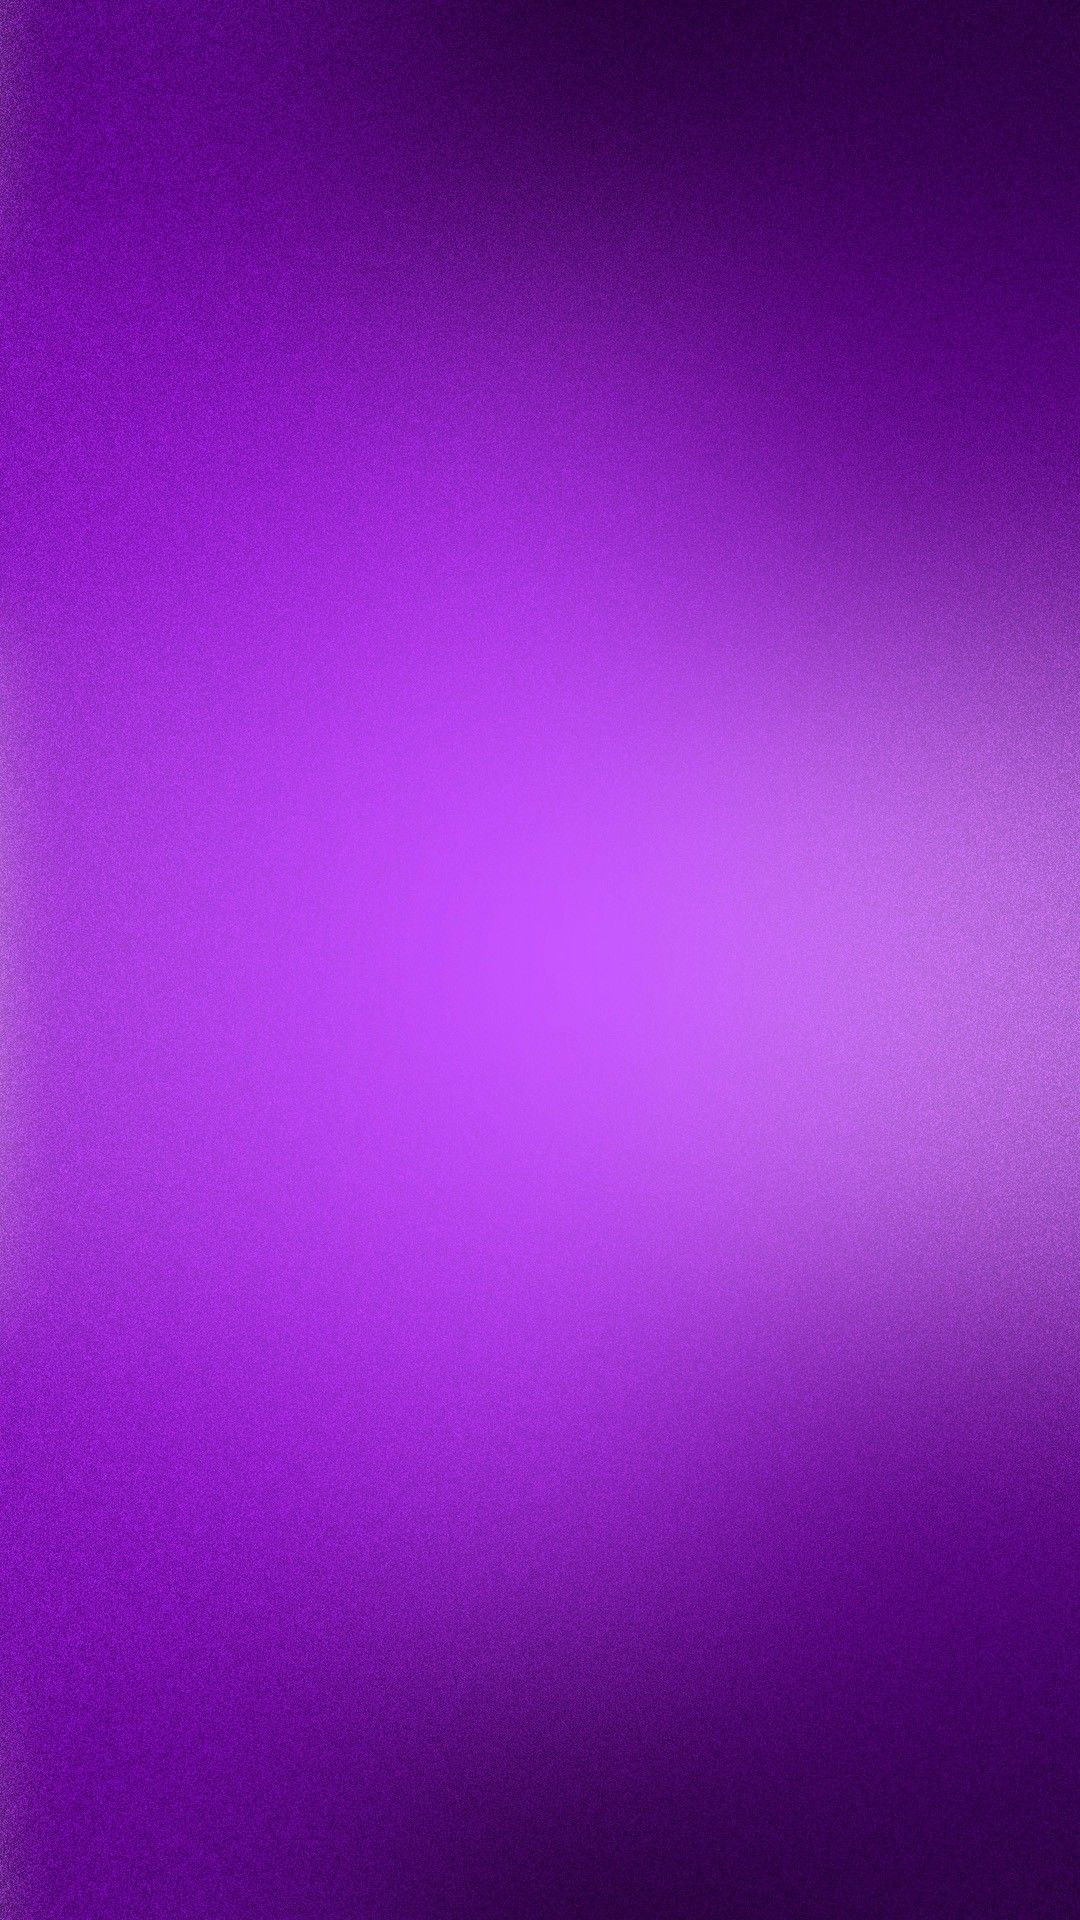 1080x1920 Hd Purple Iphone Wallpaper 2018 Iphone Wallpapers Cell Phone for iphone  purple wallpaper 2272Ã1704